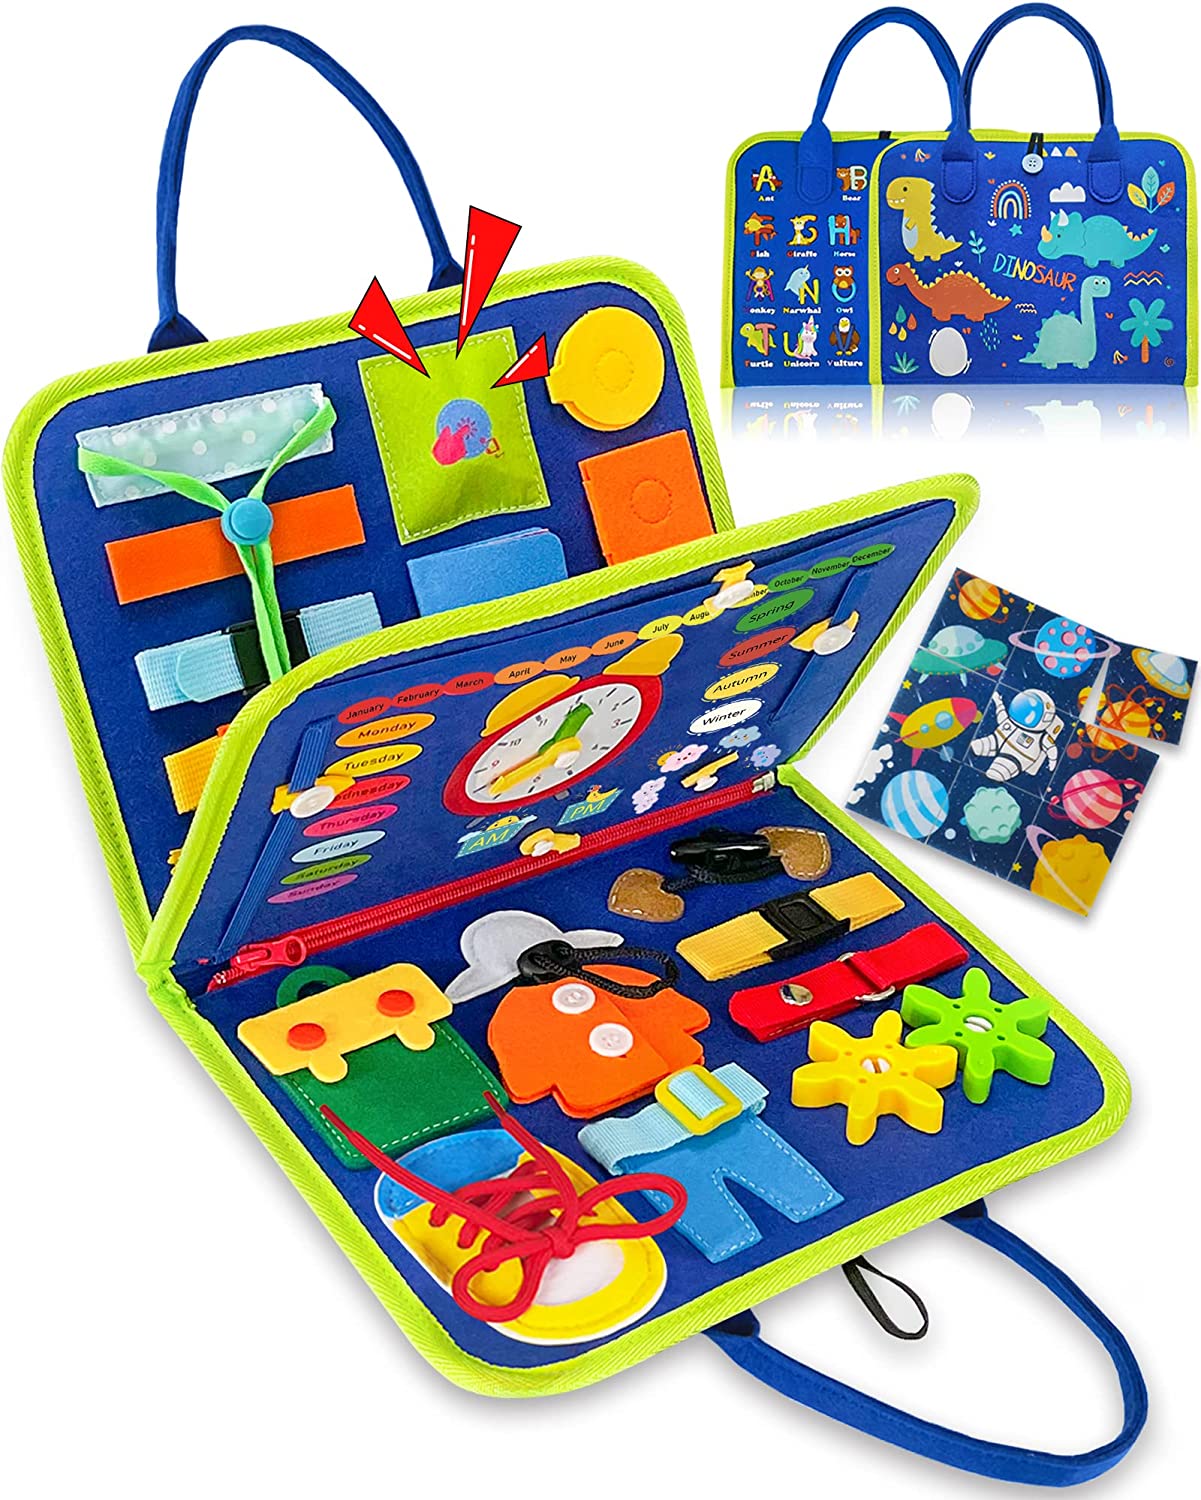 Exorany Busy Board Montessori Toys for 1 2 3 4 Year [...]